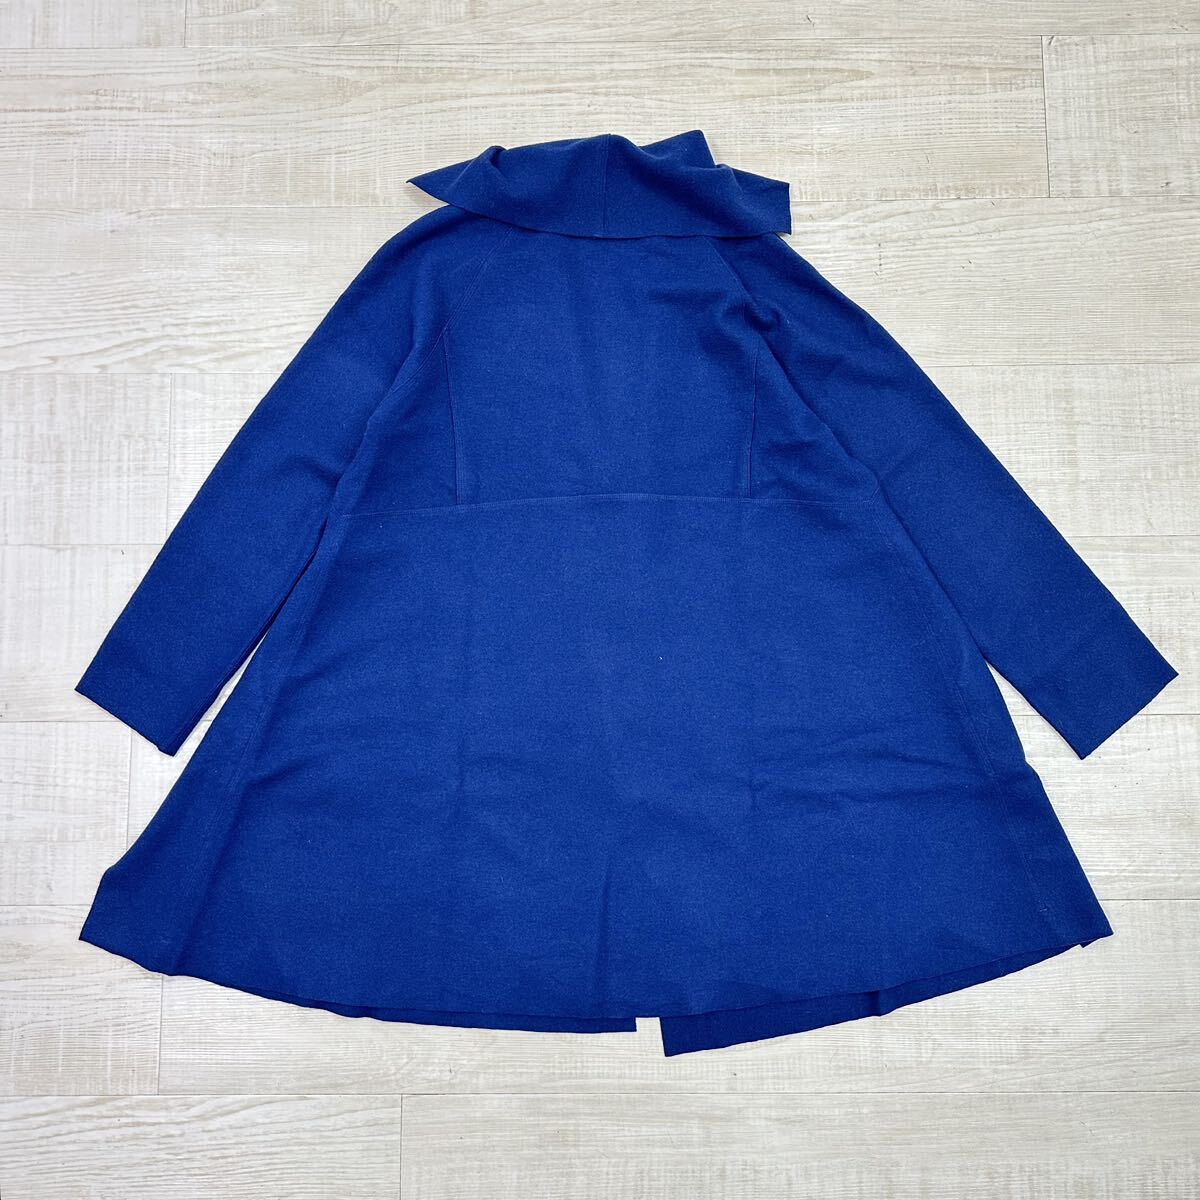 JURGEN LEHL ヨーガンレール フェルト ラム 圧縮 コート 羽織 COAT MADE IN JAPAN 日本製 ブルー 系 サイズ L_画像4